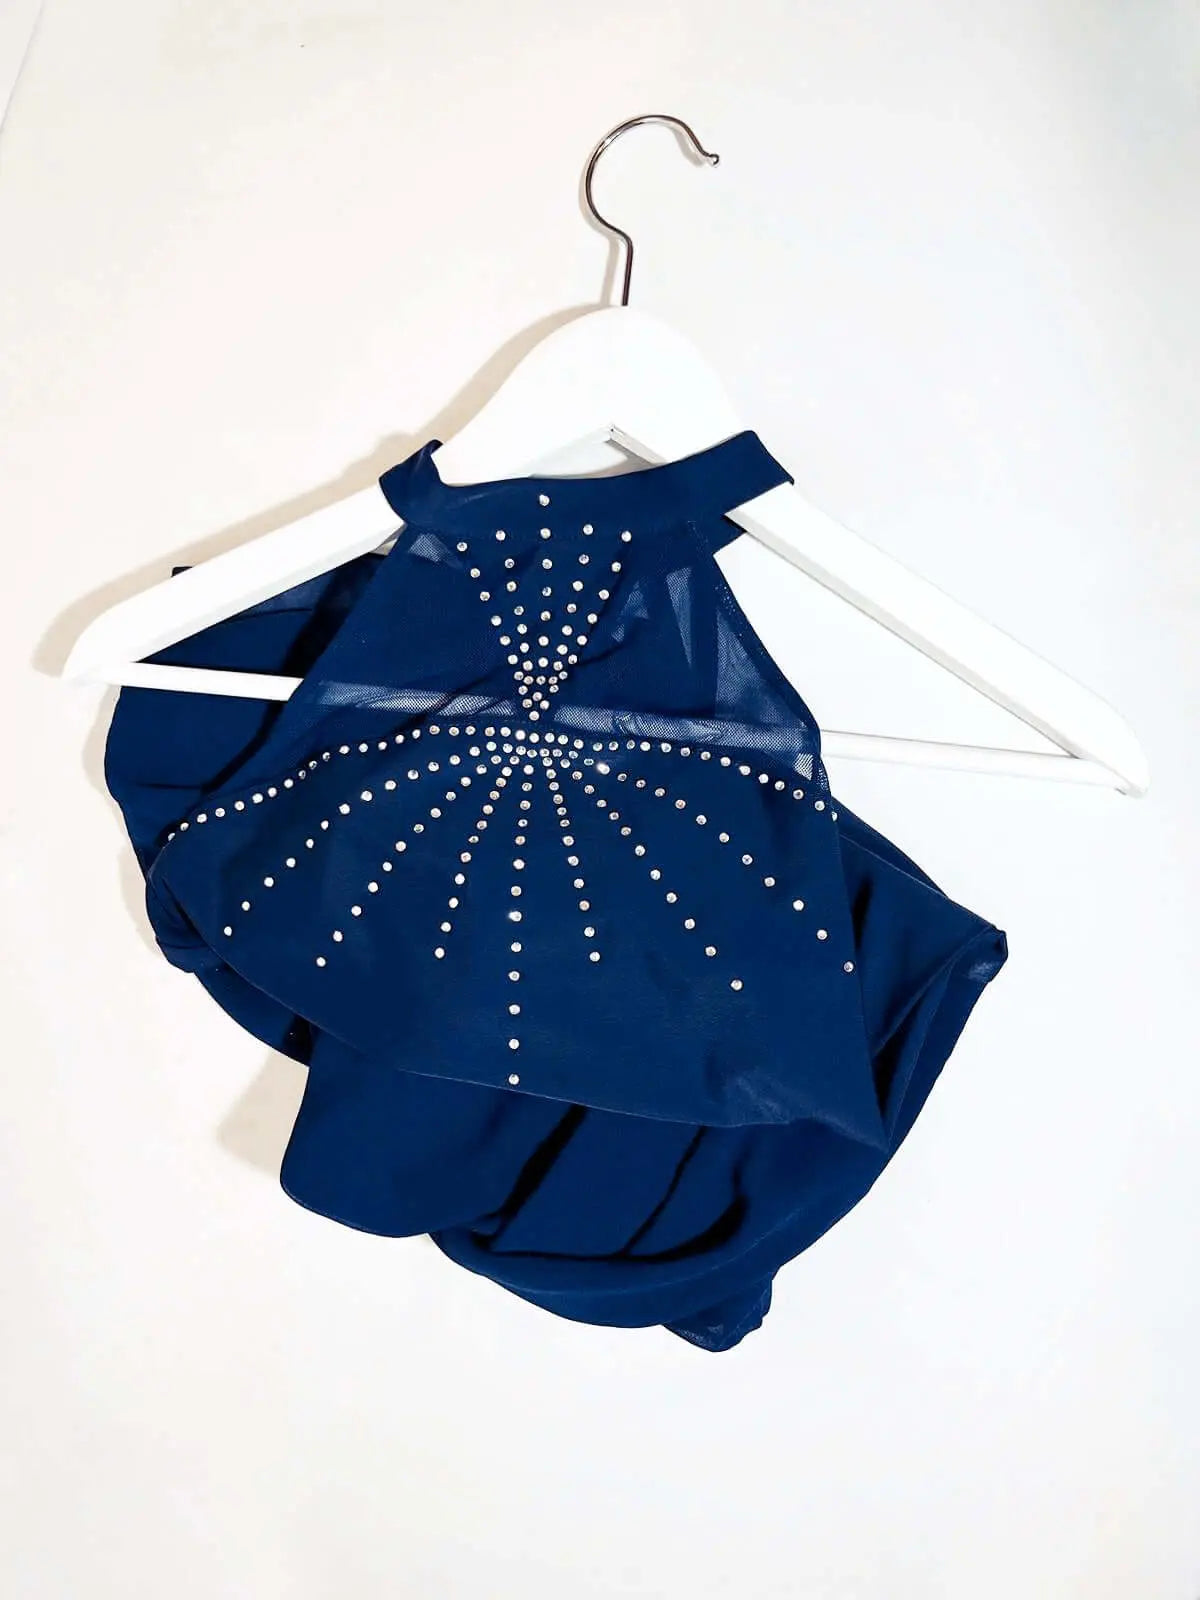 Azurite SABRHERO Dress - Luxury Tennis Apparel, Performance Gear Tennis Dresses and women’s apparel SABRHERO